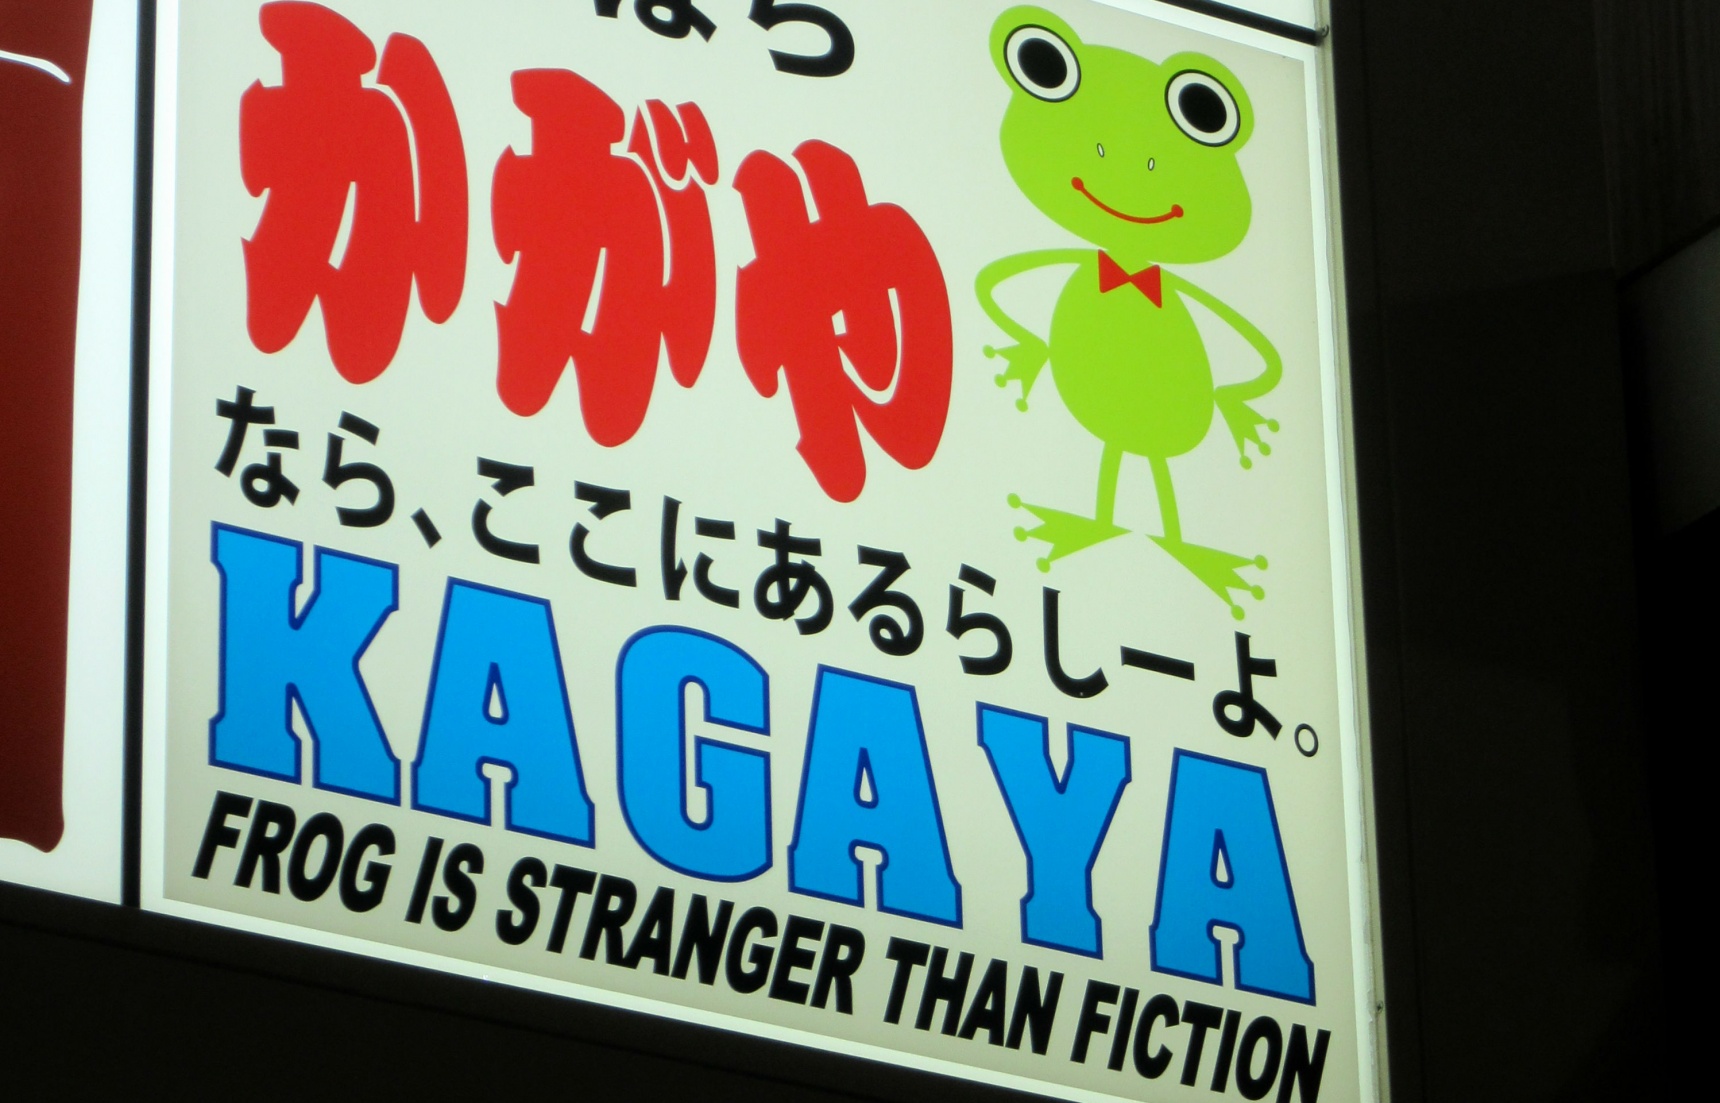 This 'Izakaya' Truly Is Stranger than Fiction!